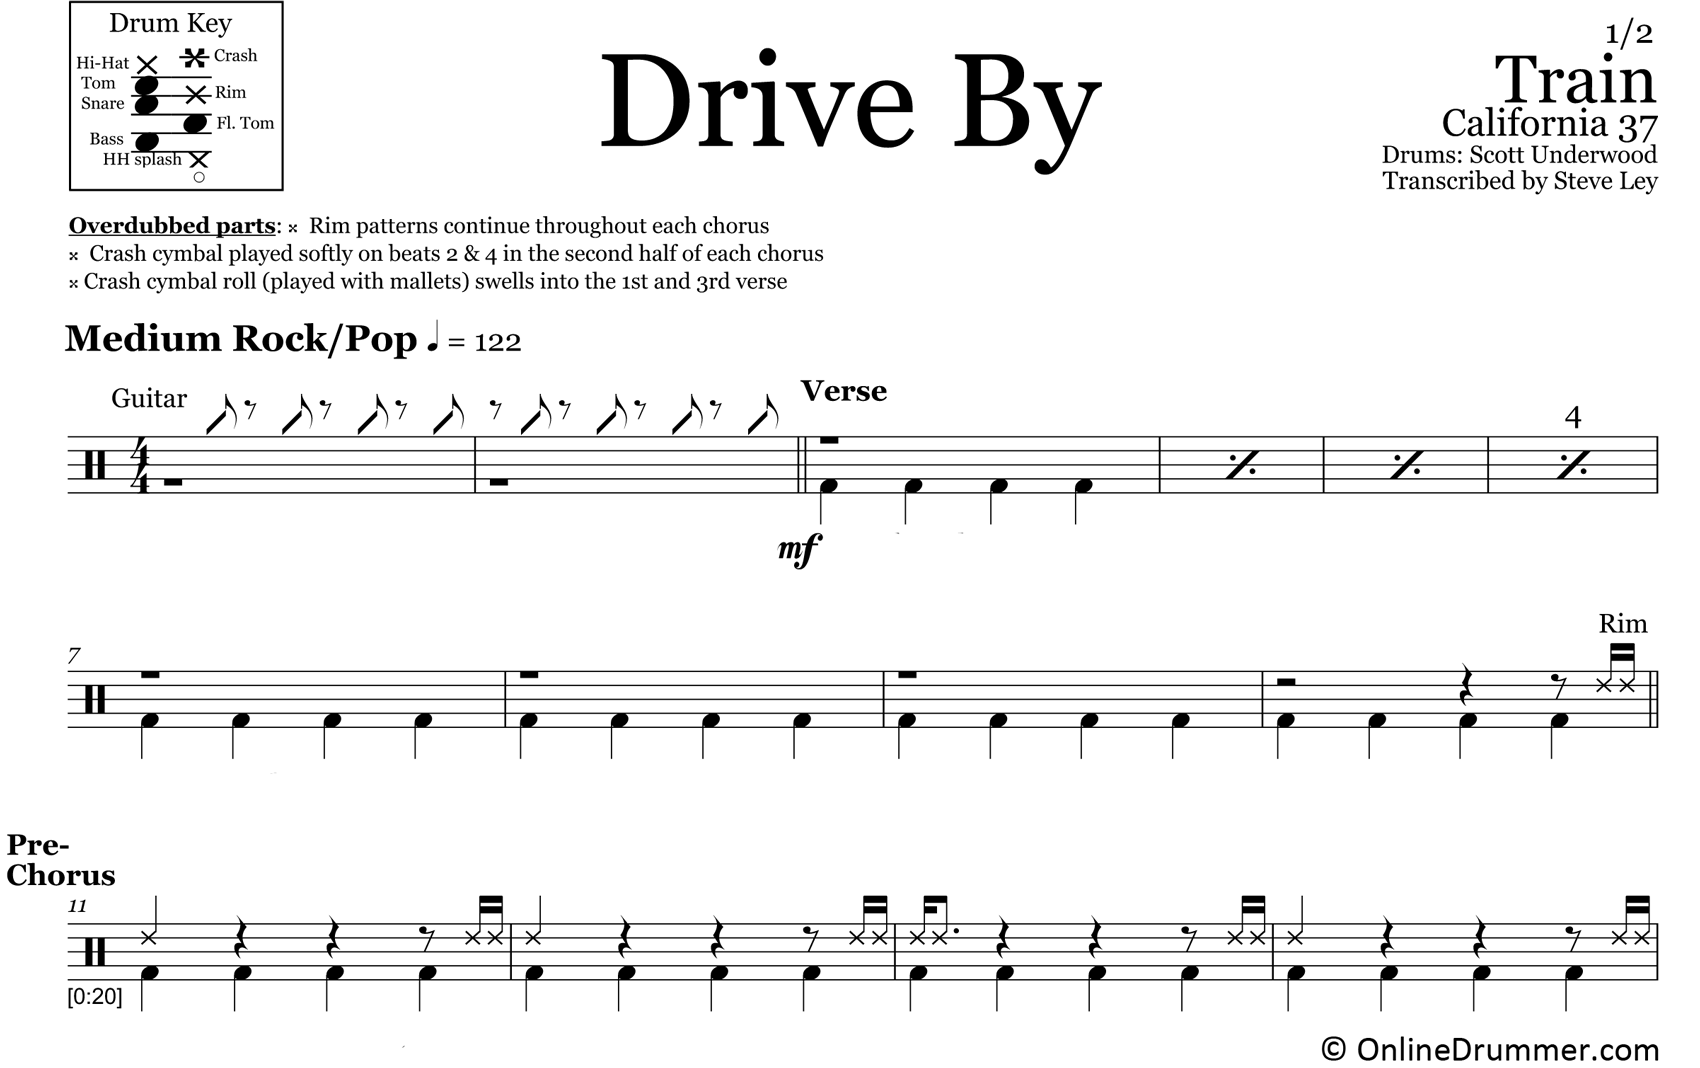 Drive By - Train - Drum Sheet Music